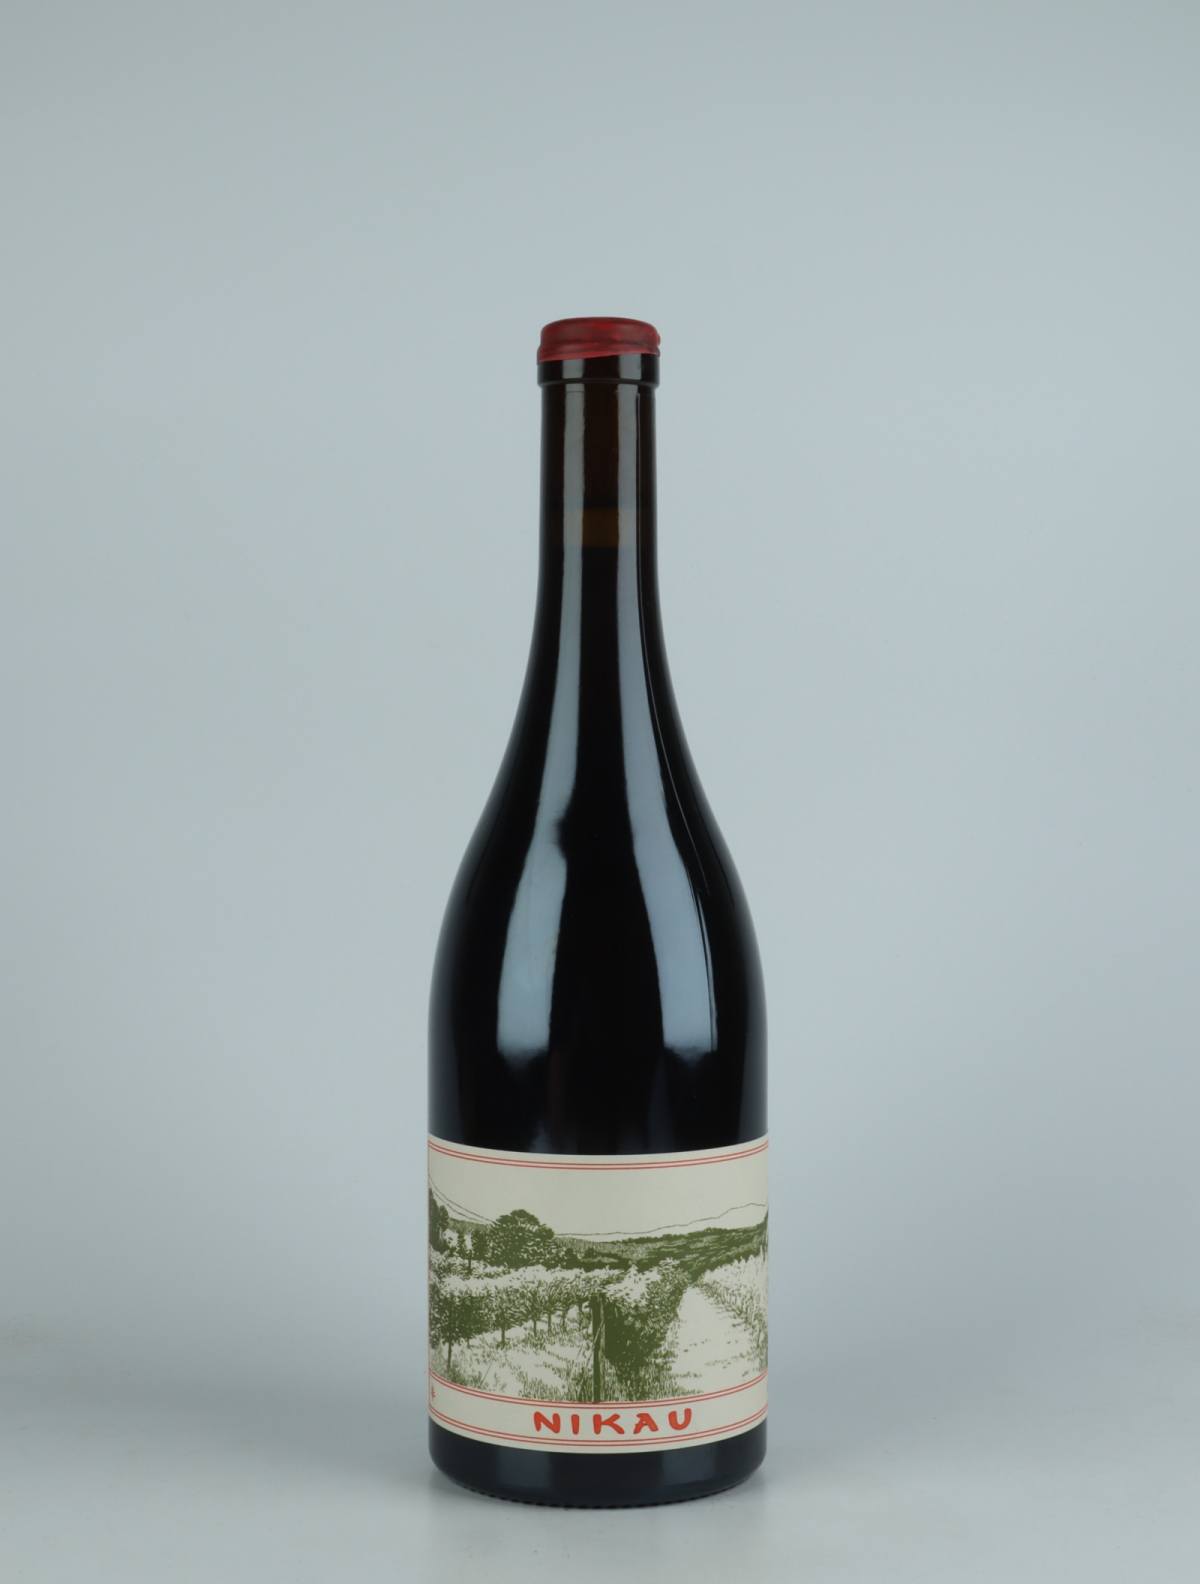 En flaske 2020 Tonimbuk Pinot Noir Rødvin fra Nikau Farm, Victoria i Australien